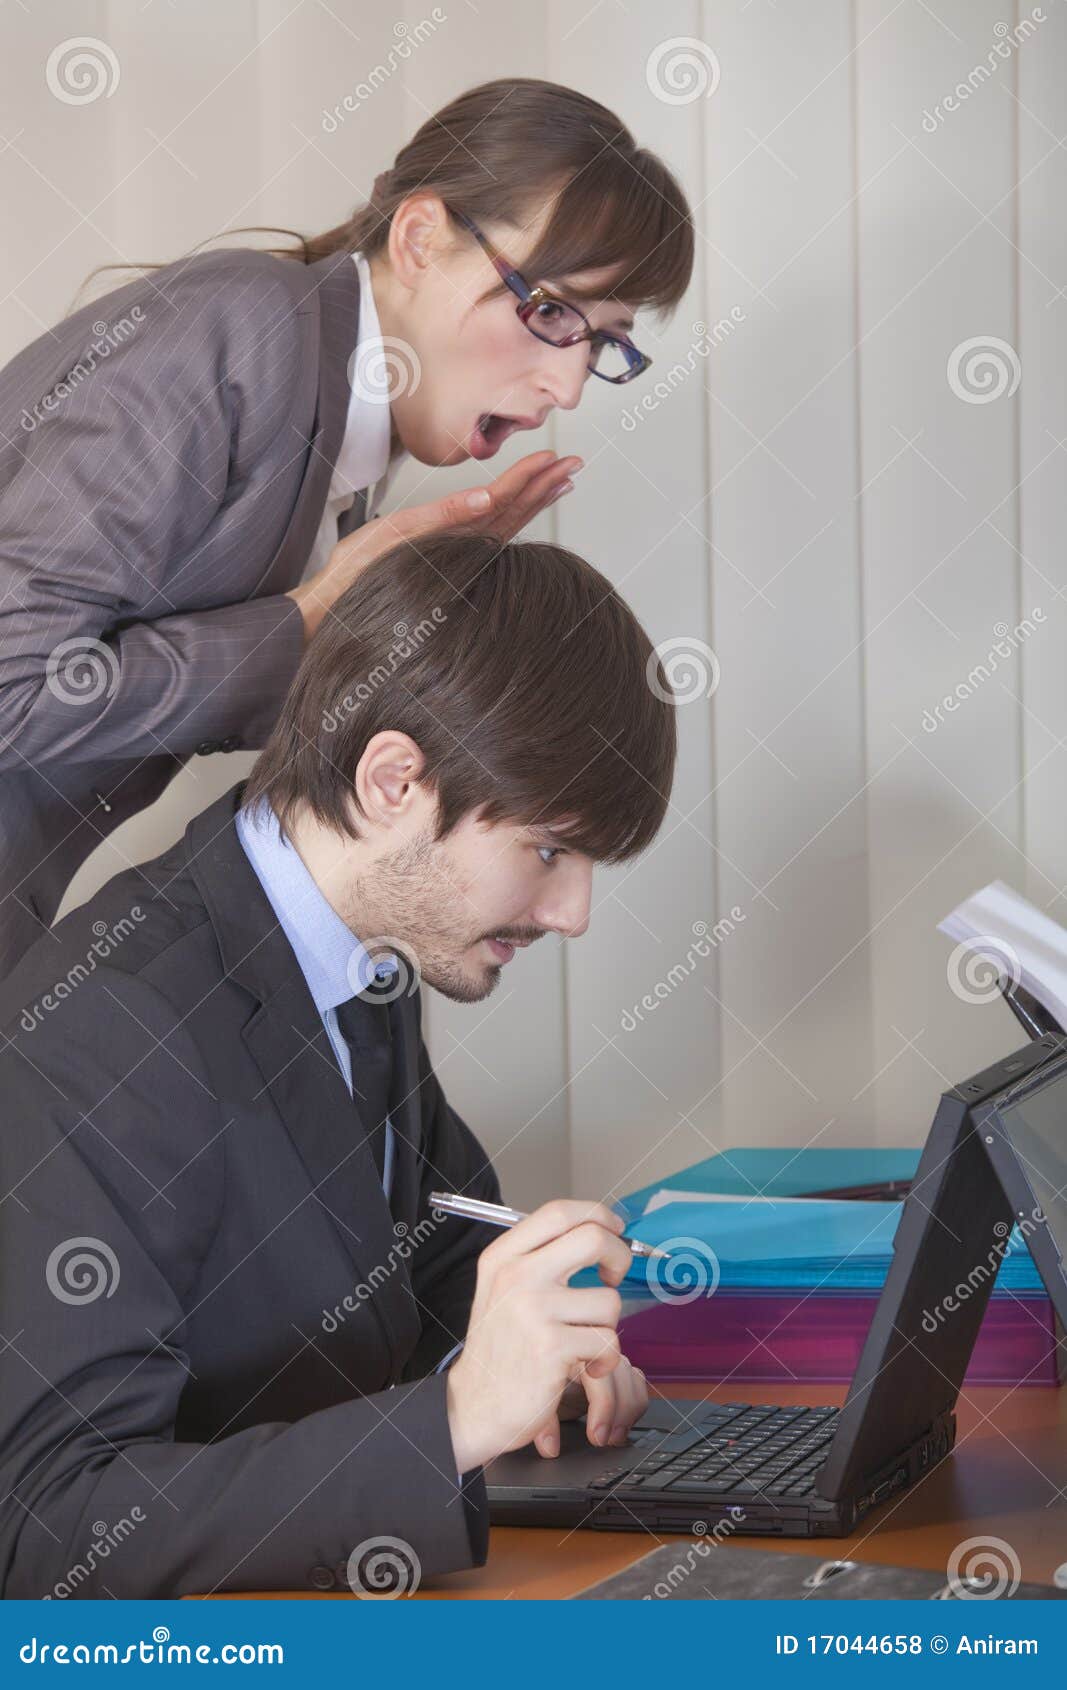 Woman Looking Over Man Shoulder At Computer Royalty Free Stock Photos